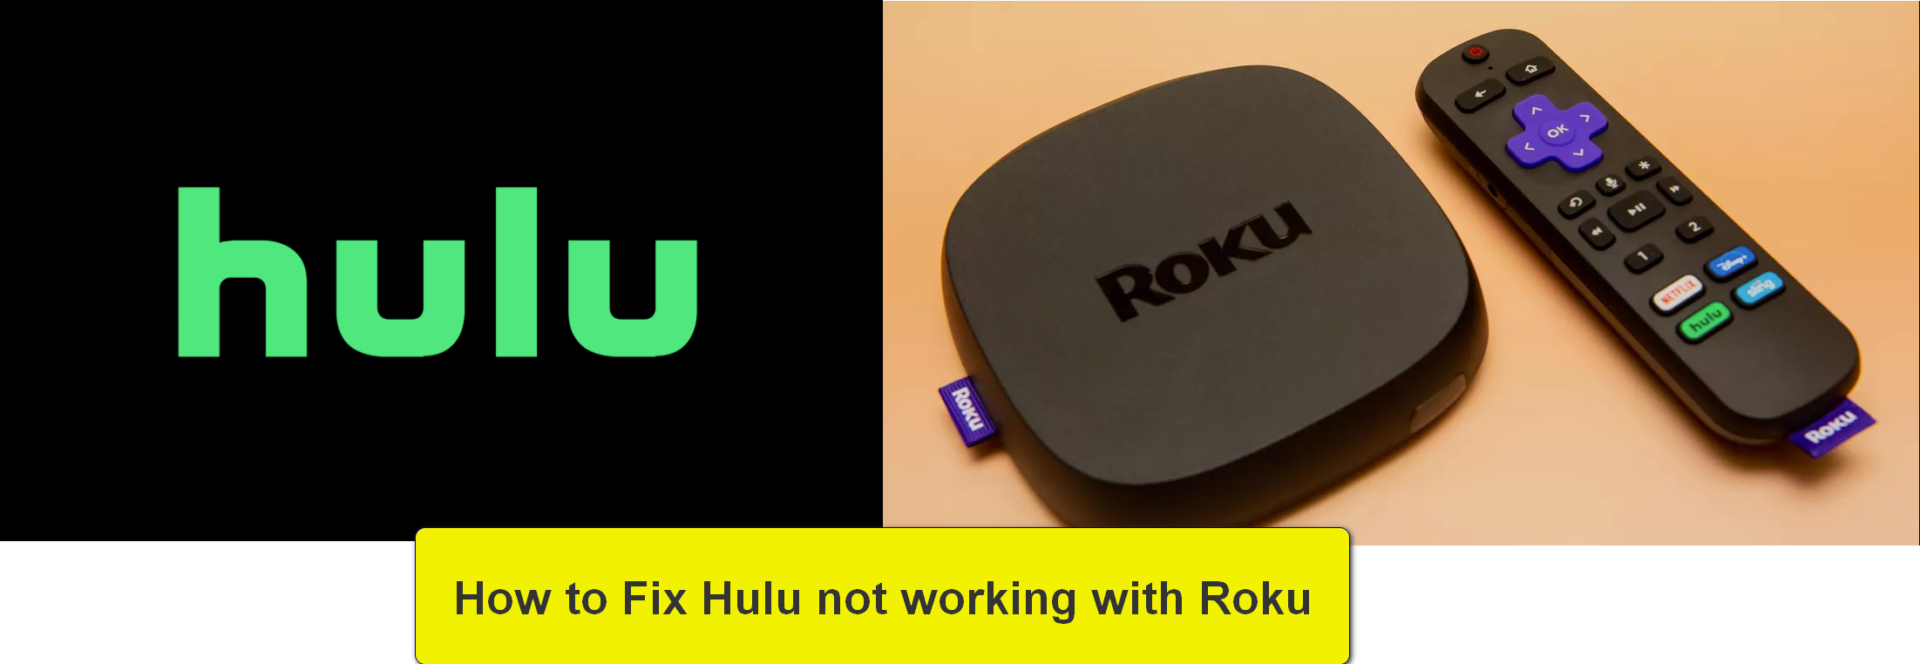 Hulu not working with Roku